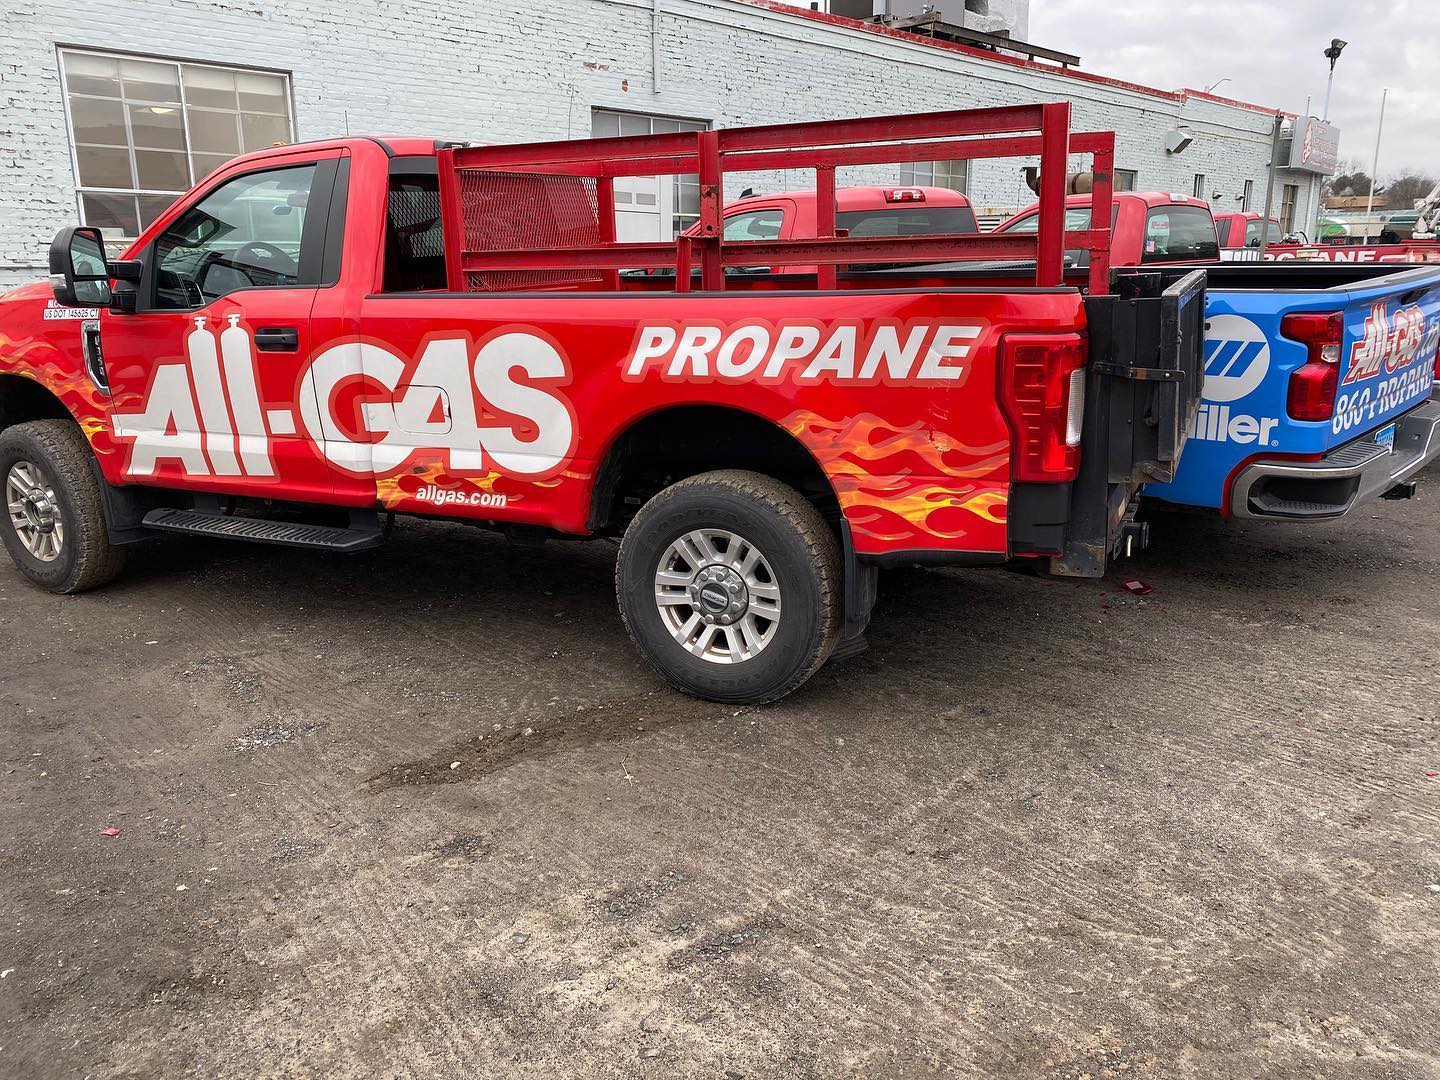 All Gas Hartford, Connecticut